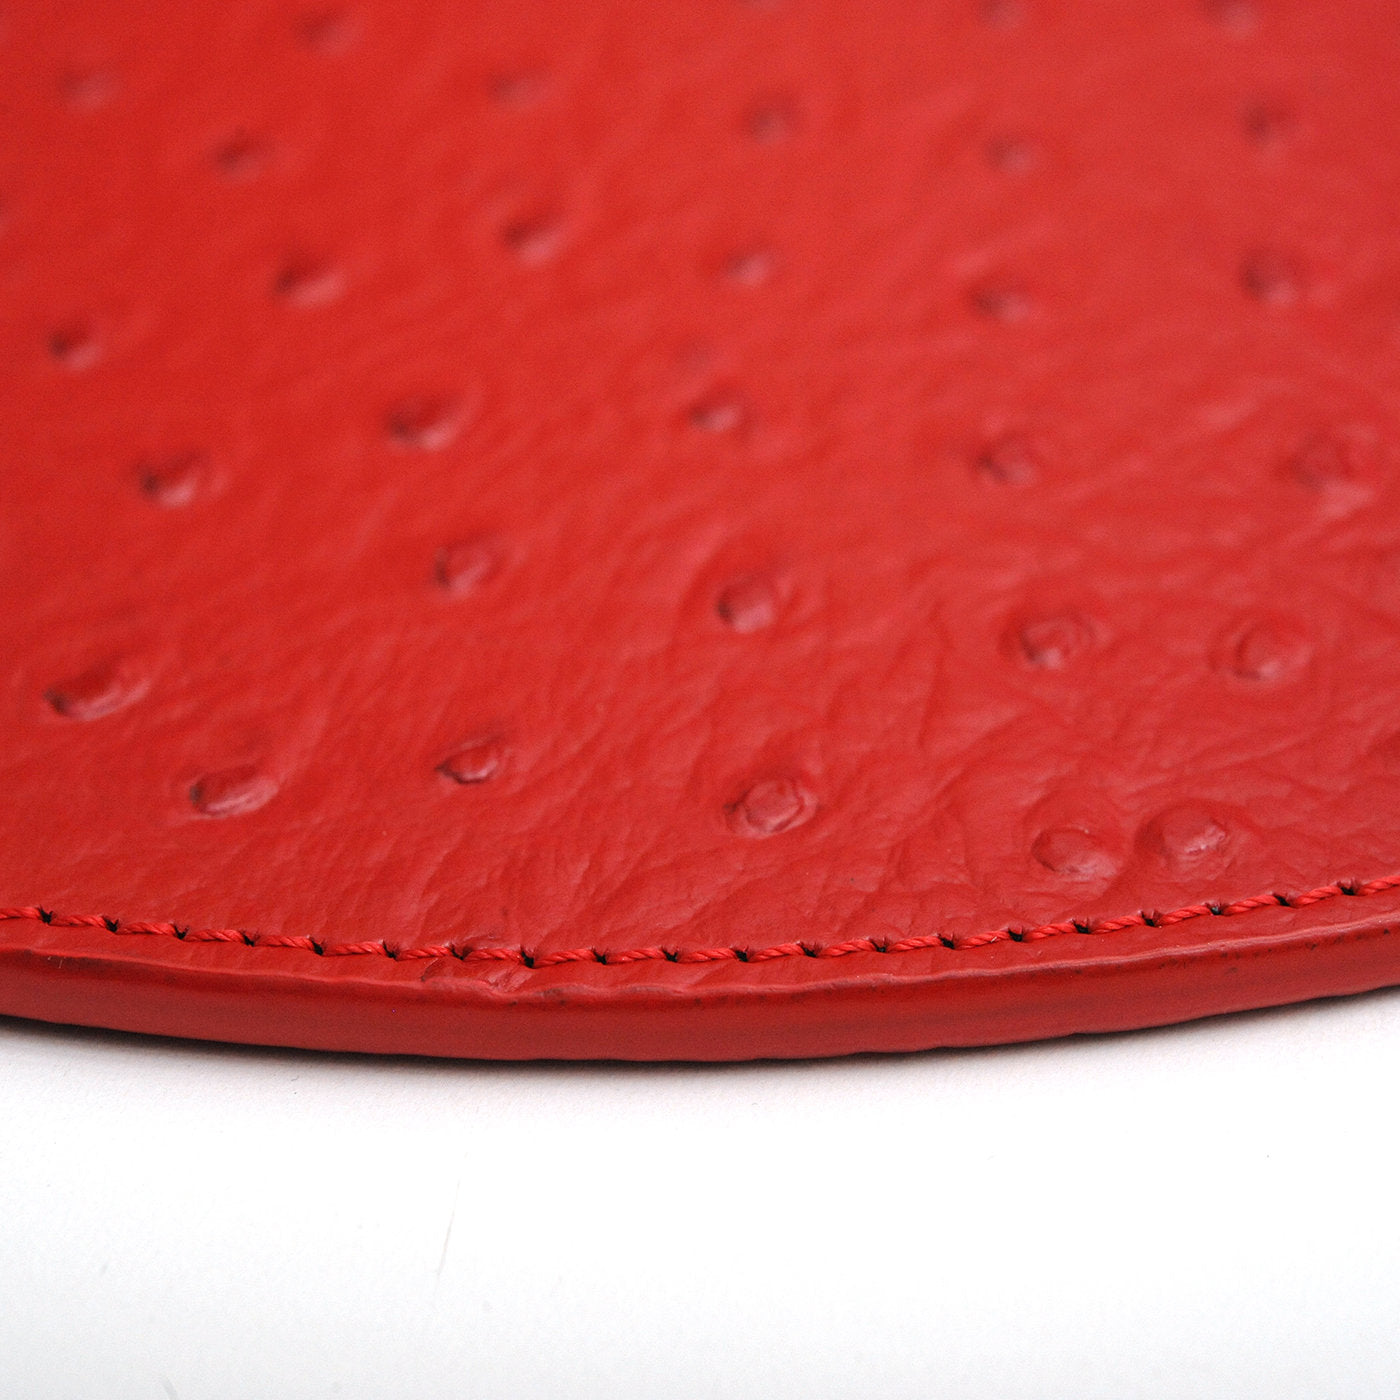 Kenya Medium Set of 2 Round Red Leather Placemats - Alternative view 5